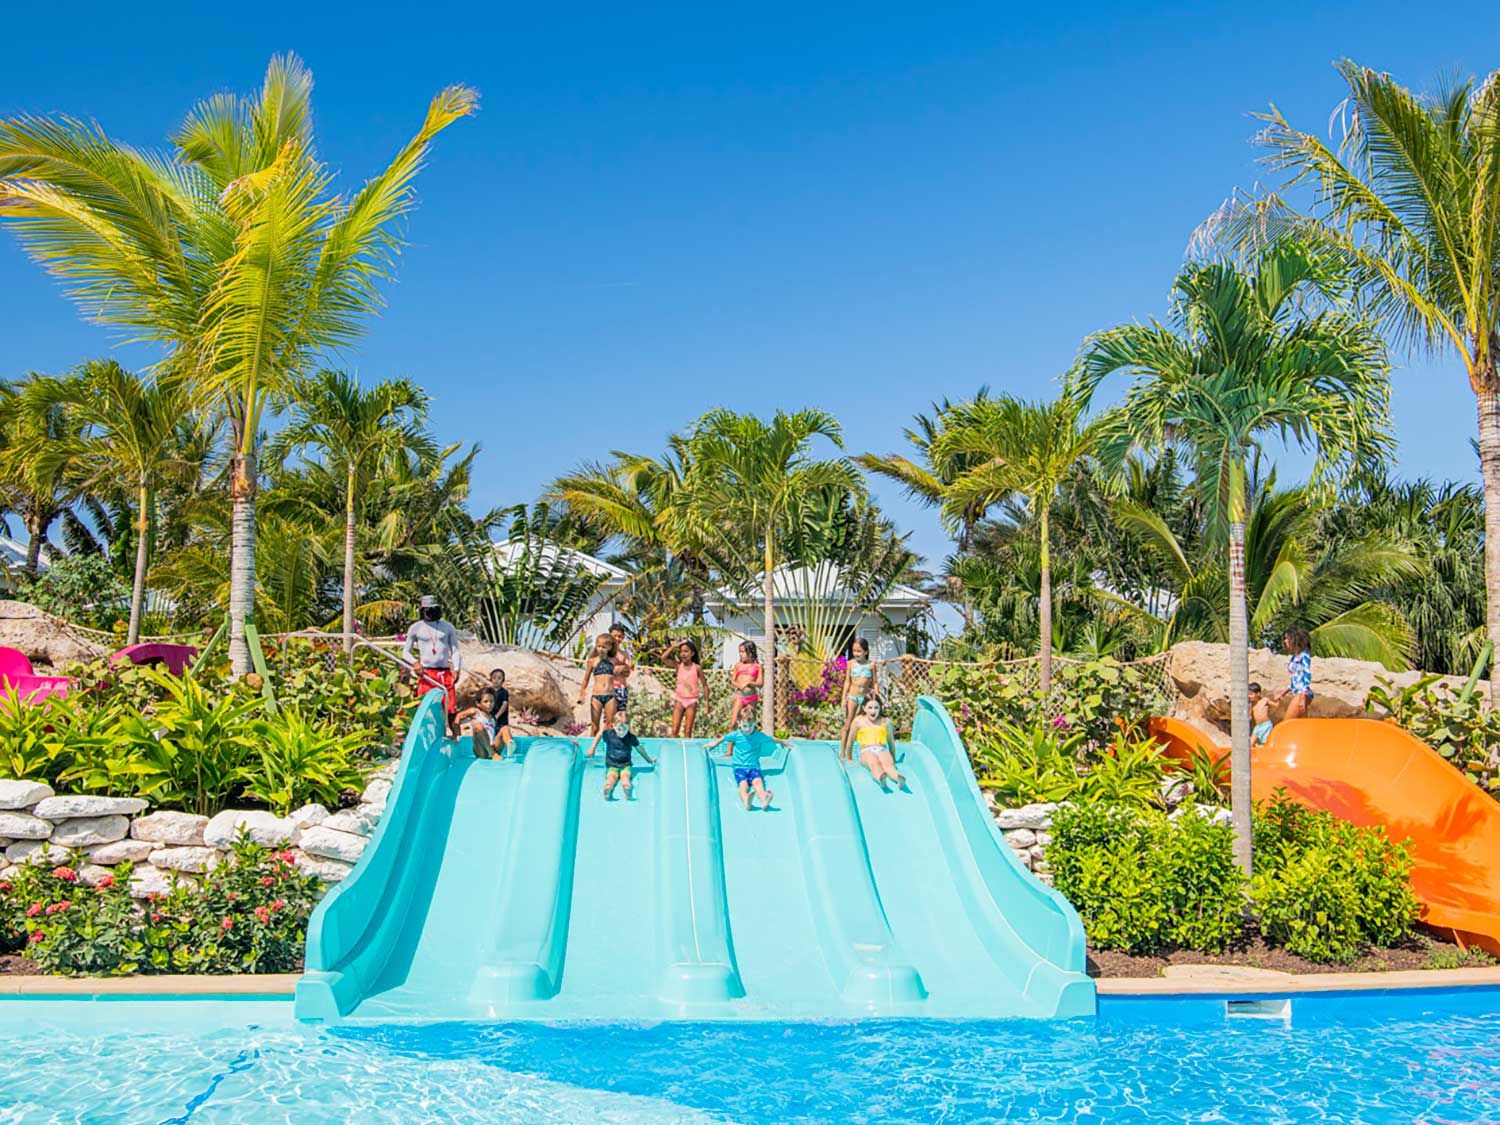 Kids sliding down a water slide at a beach-side resort water park.